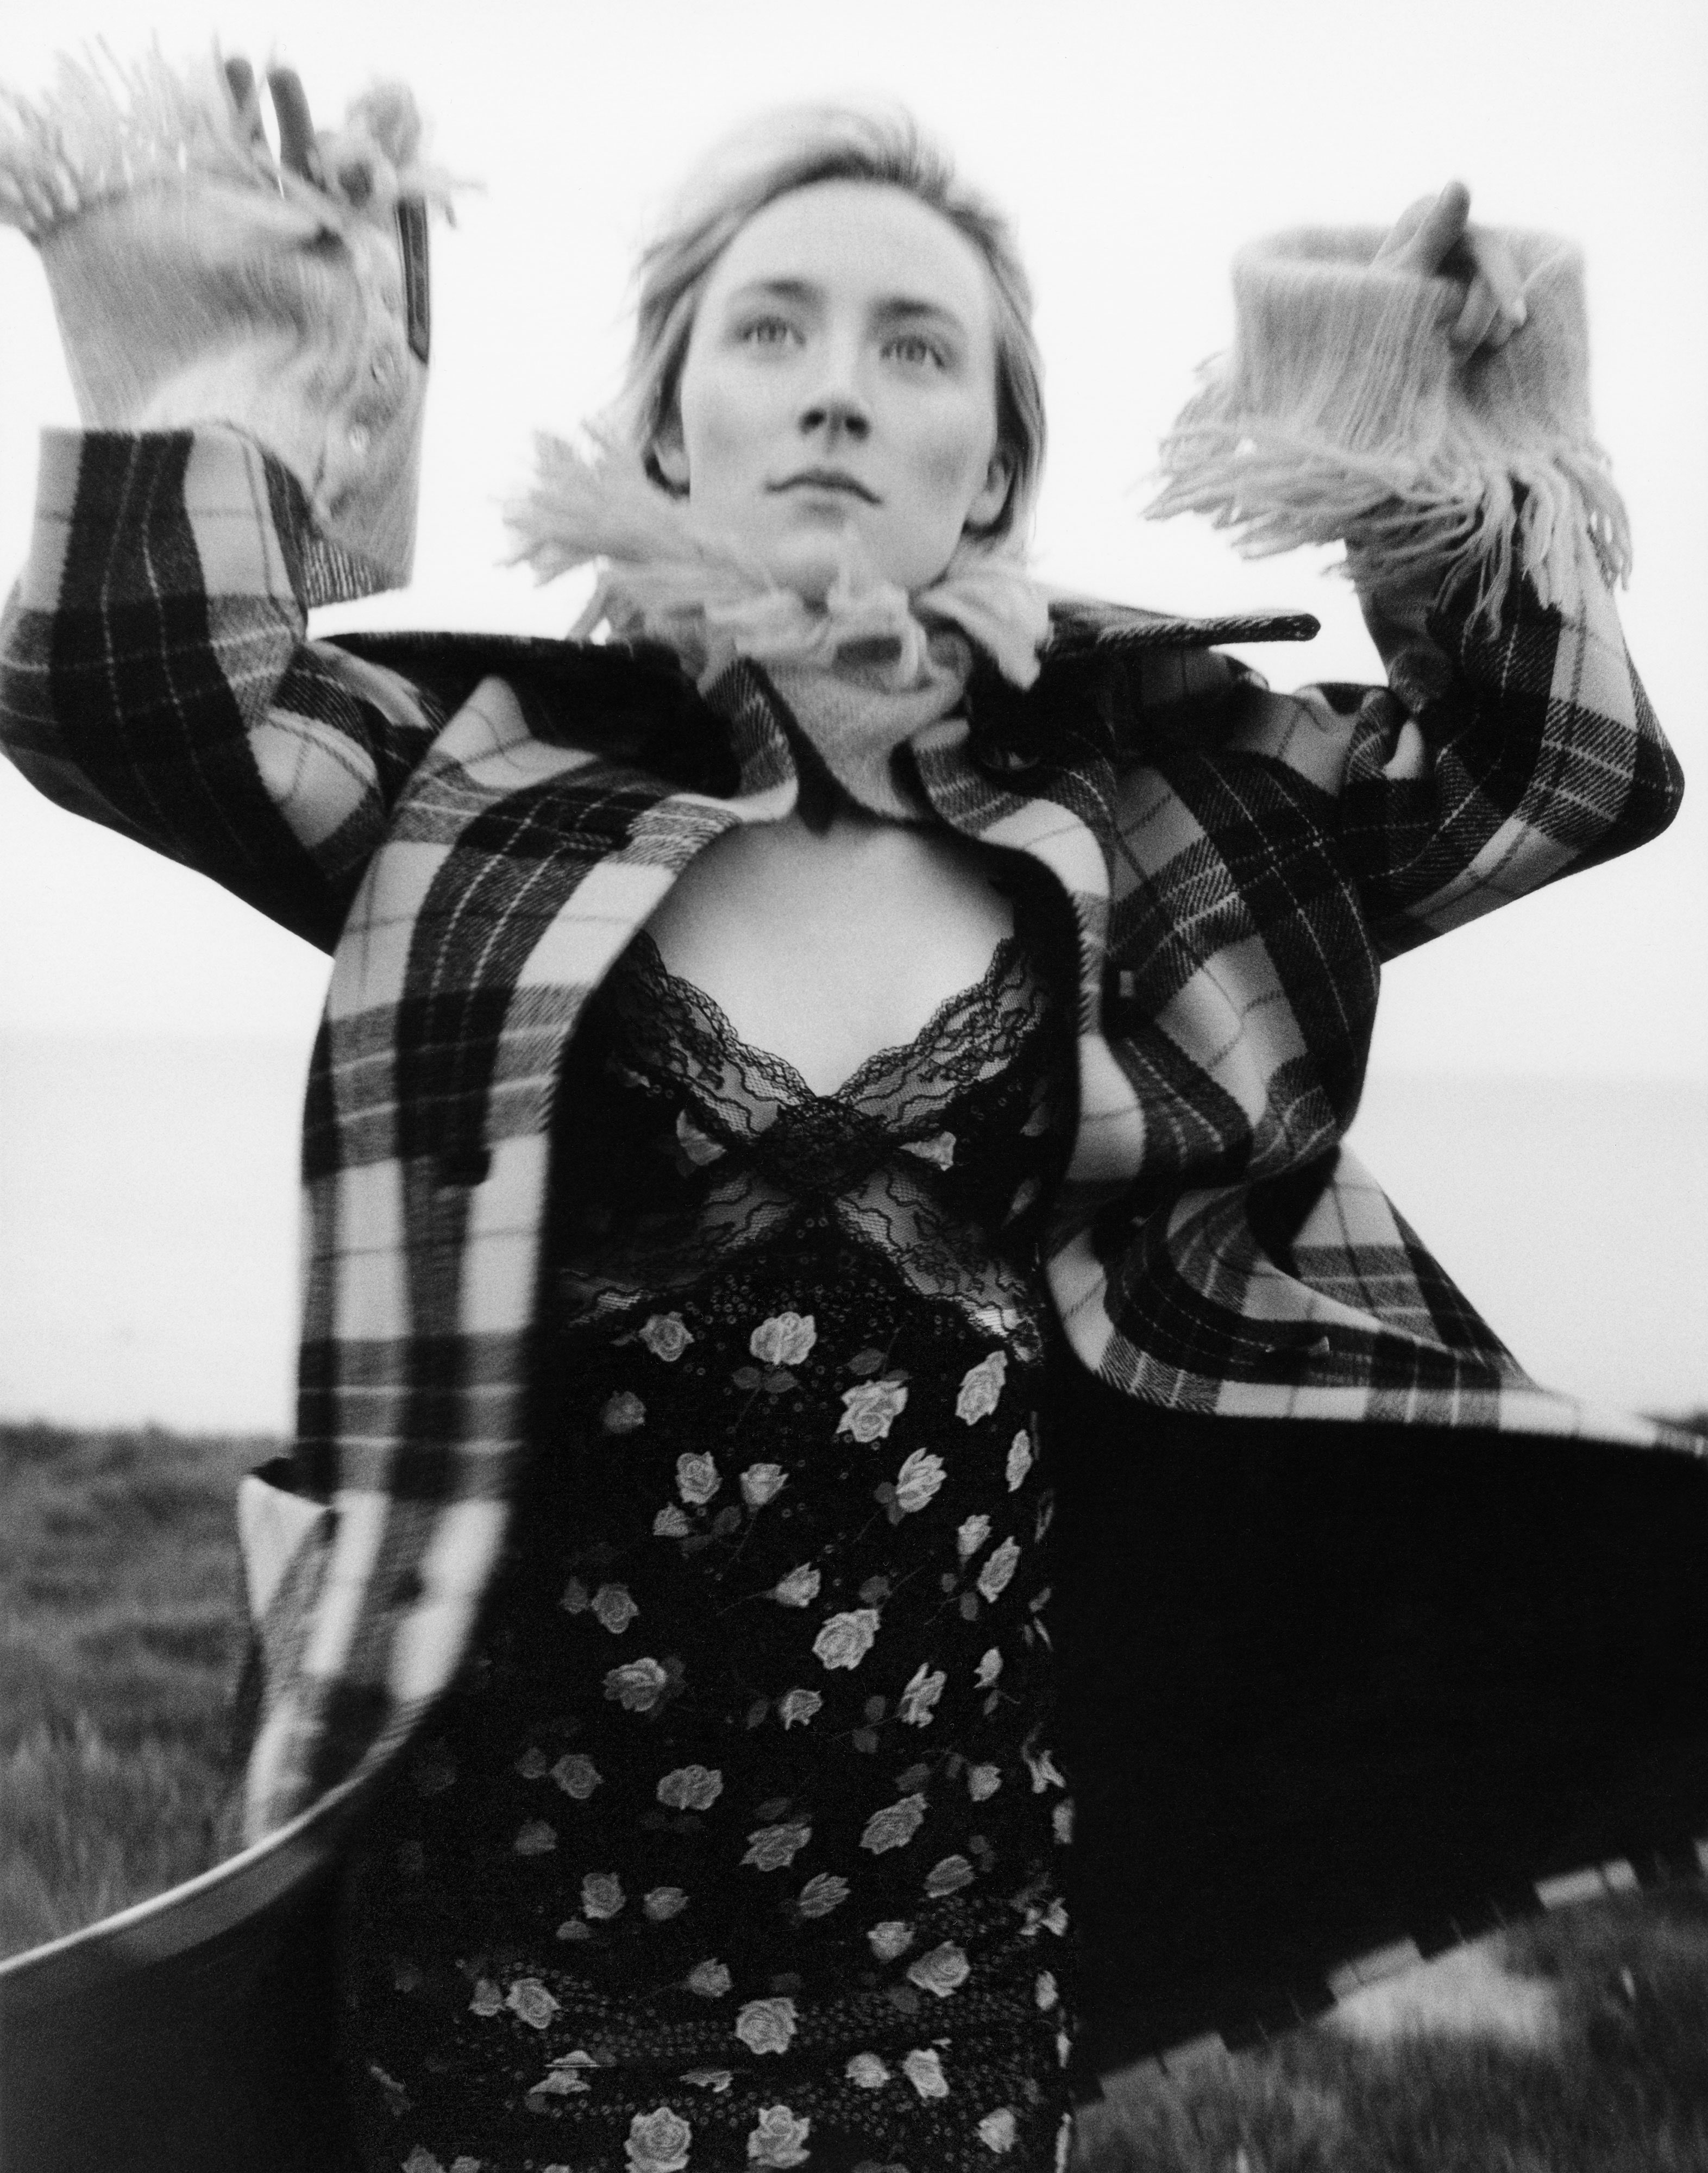 Saoirse Ronan 2018 AnOther Magazine Photoshoot Wallpapers